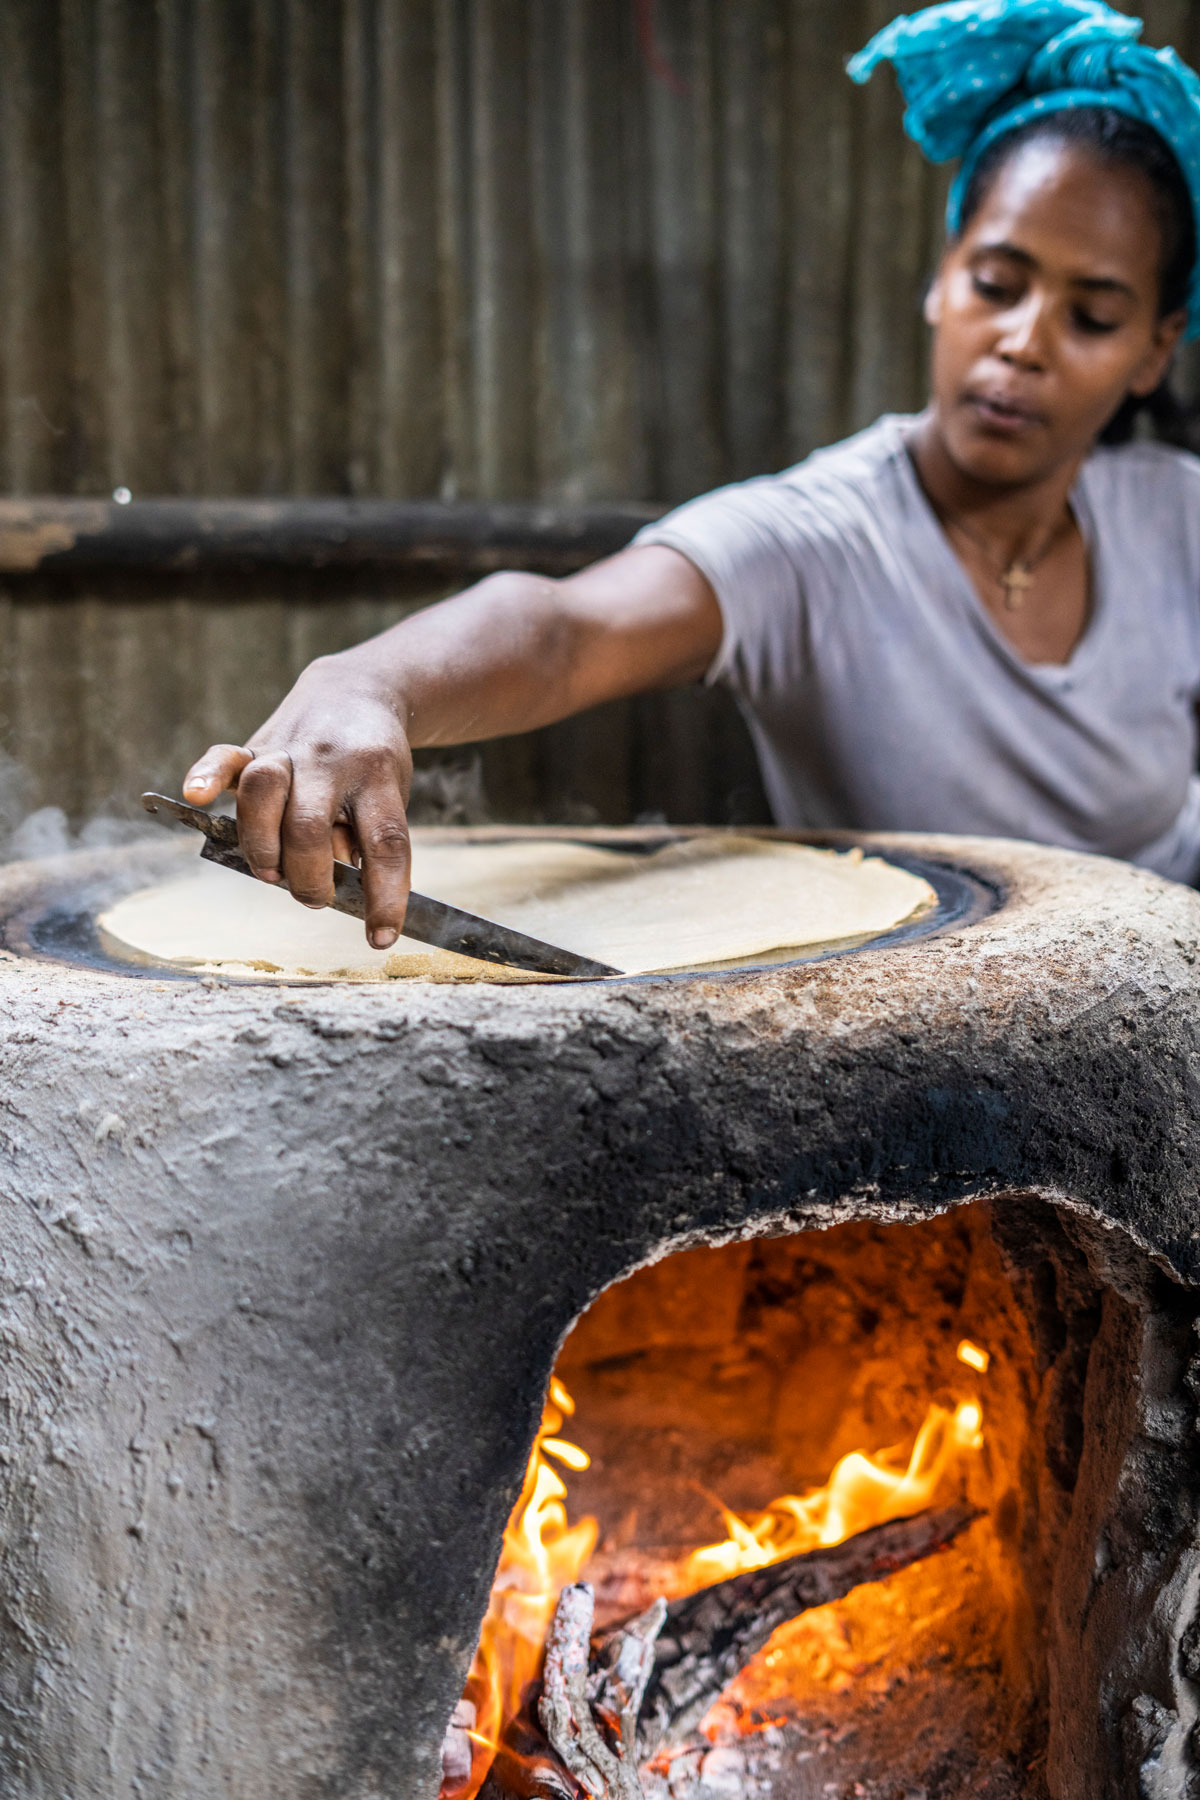 A person making Ethiopian flatbread.